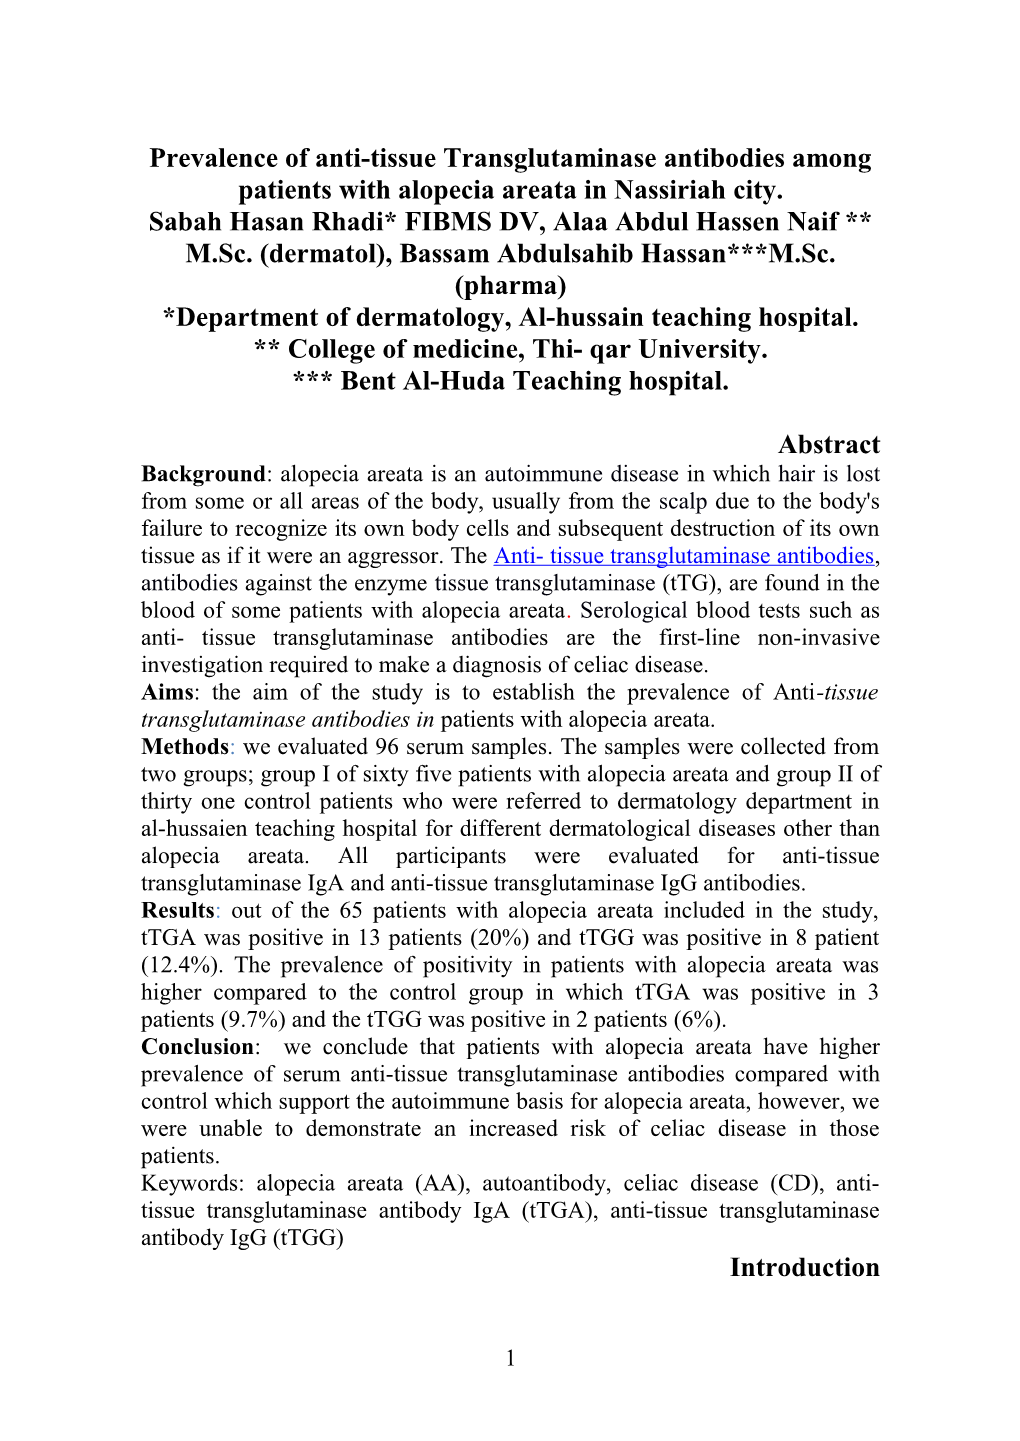 Prevalence of Anti-Tissuetransglutaminase Antibodiesamongpatients with Alopecia Areatain